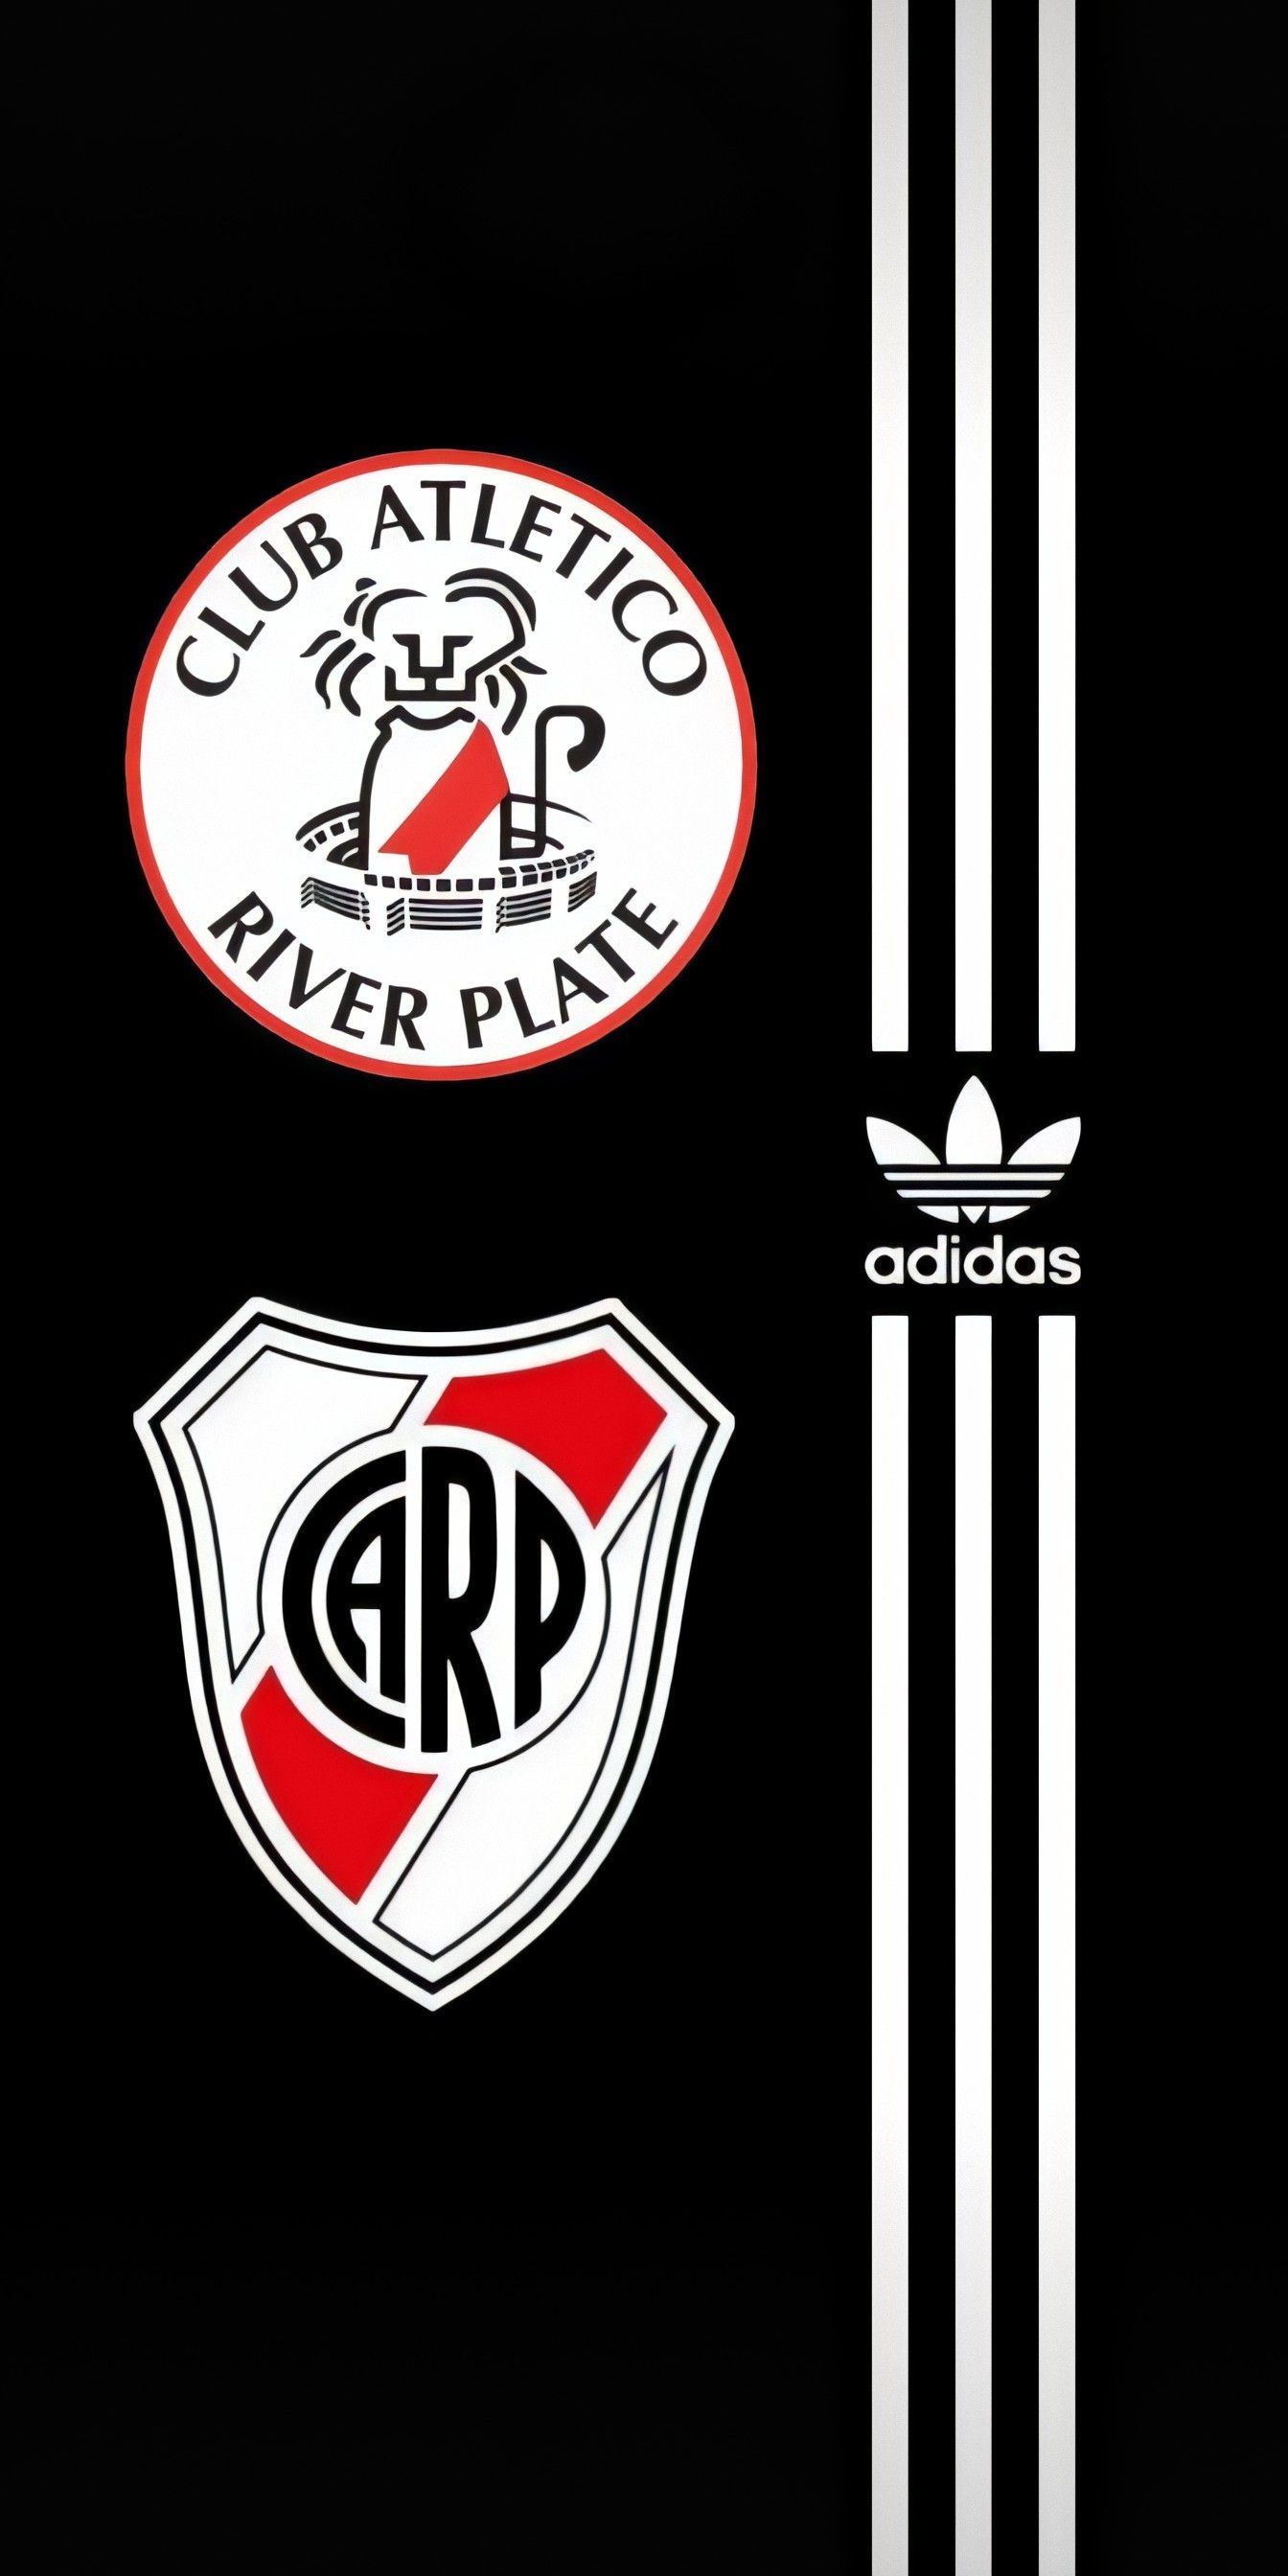 River Plate ideas. river, club atlético river plate, football kits